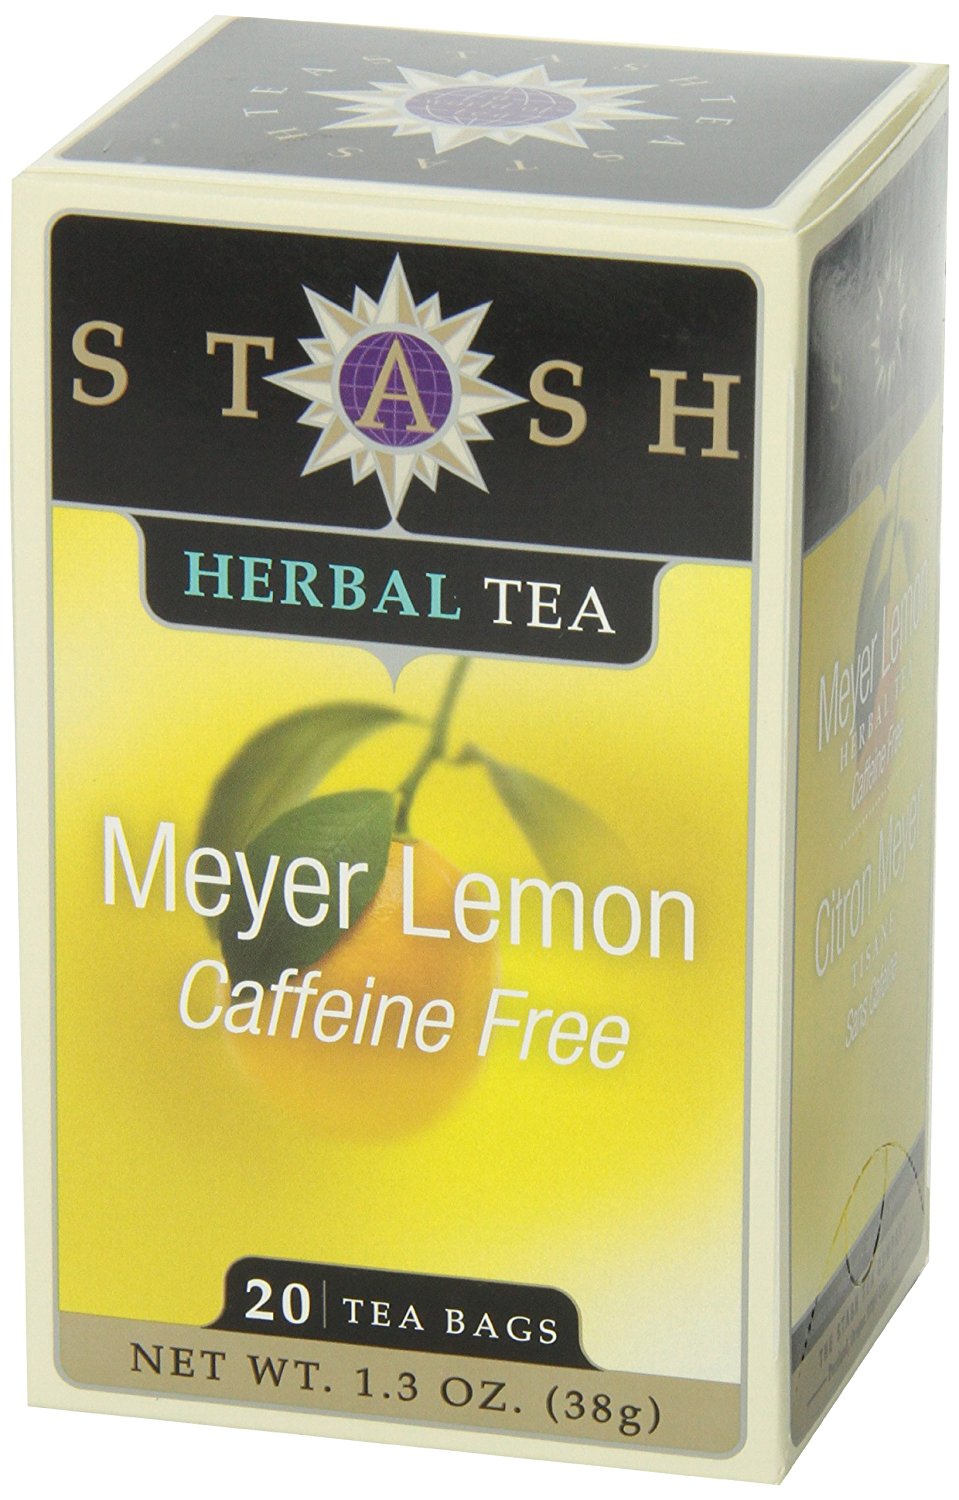 Stash Tea Licorice Spice Herbal Tea, 20 Count Tea Bags in Foil (Pack of ...